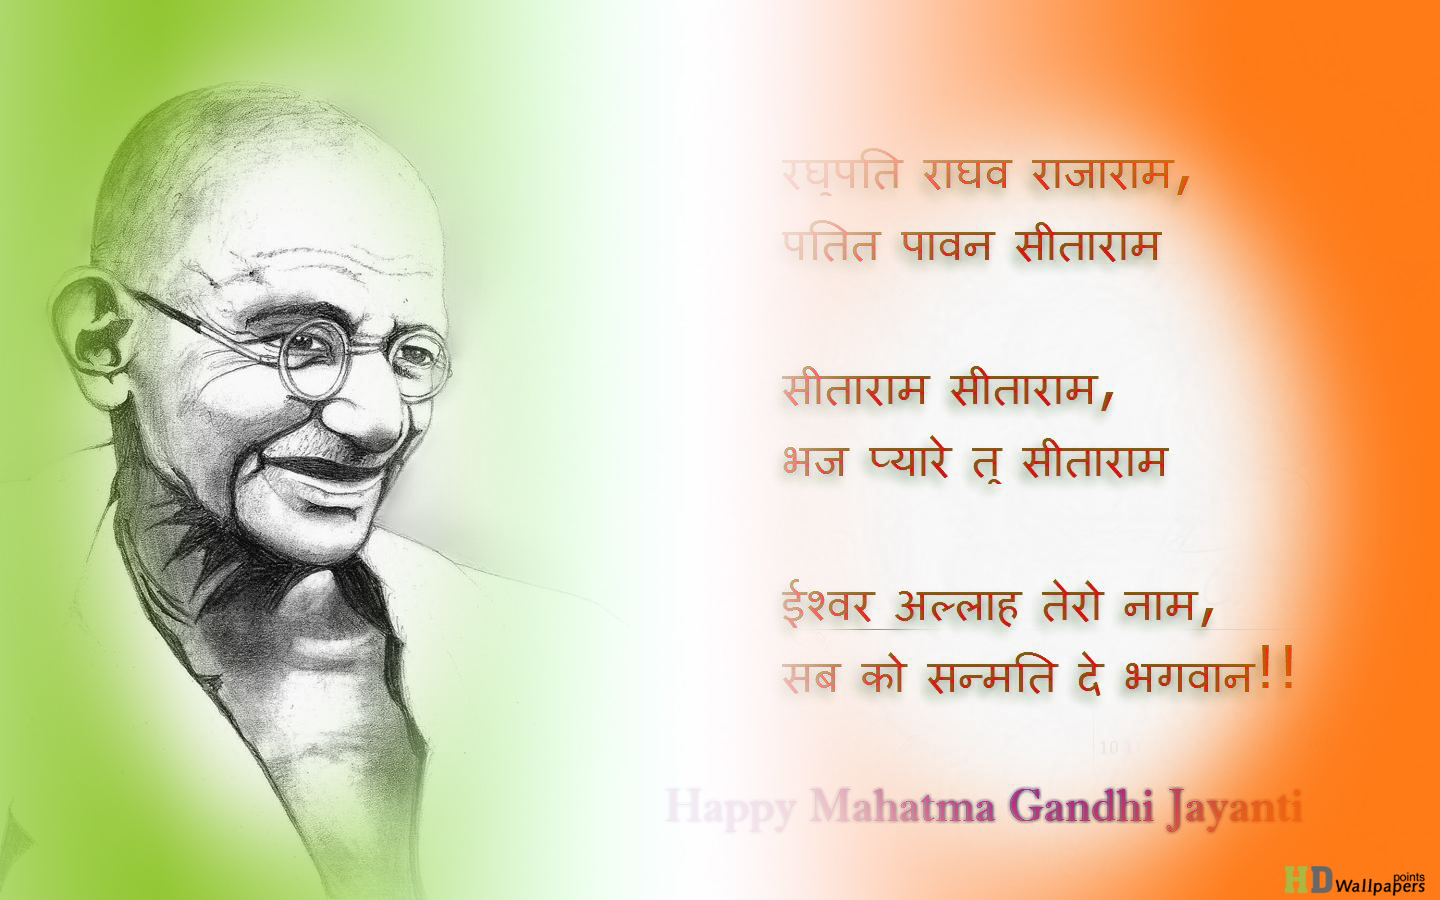 Famous Quotes By Mahatma Gandhi Images For Facebook - Mahatma Gandhi Jayanti  2017 - 1440x900 Wallpaper 